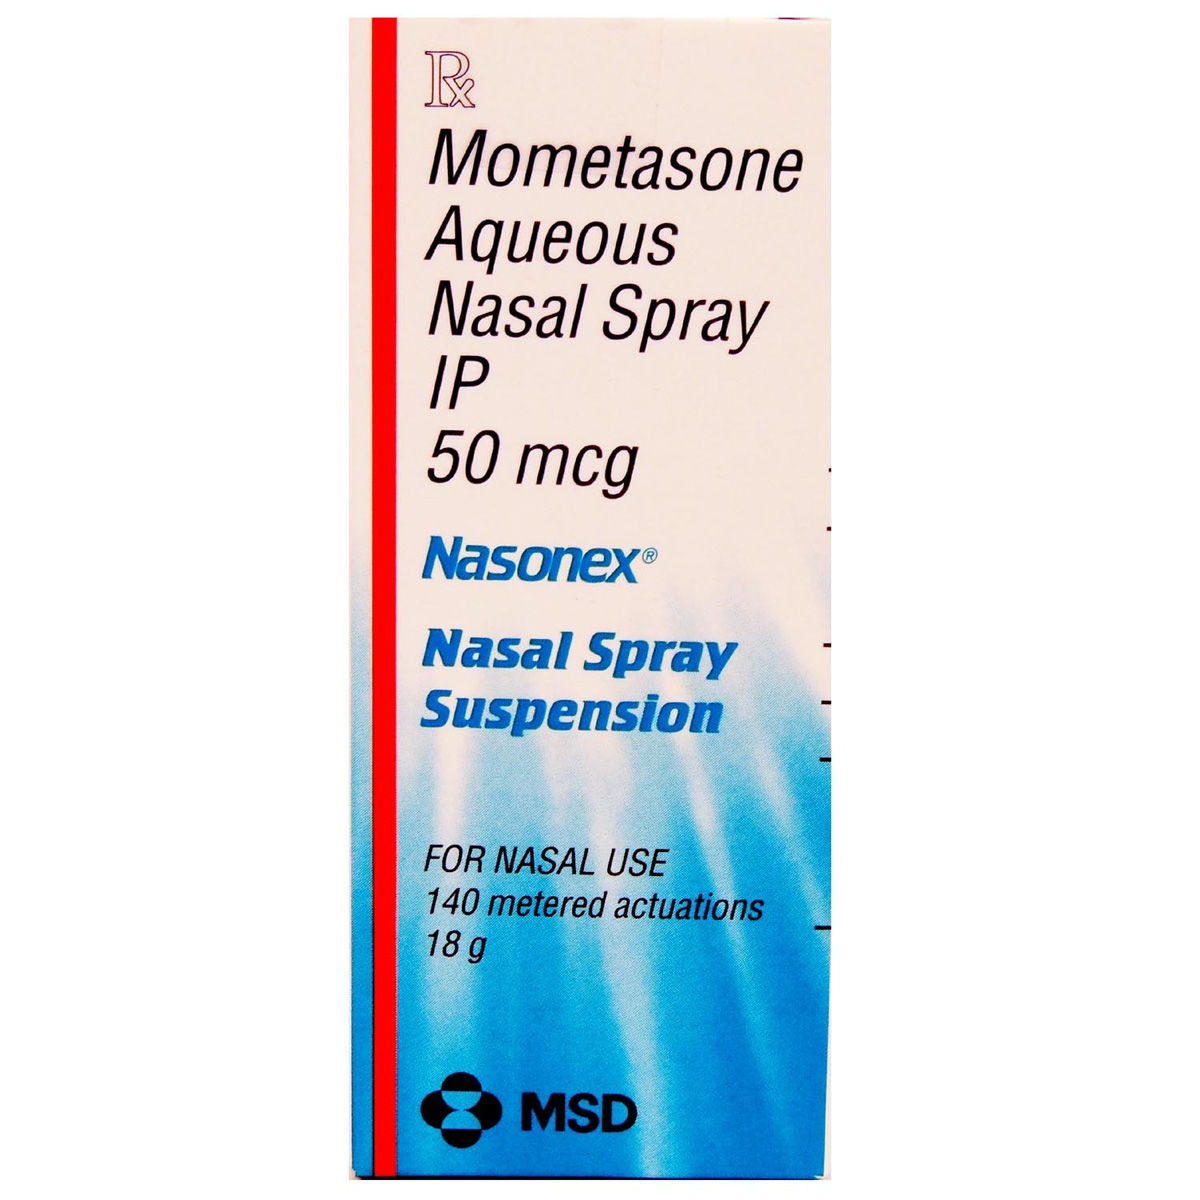 Nasonex Nasal Spray Suspension, Uses, Side Effects, Price